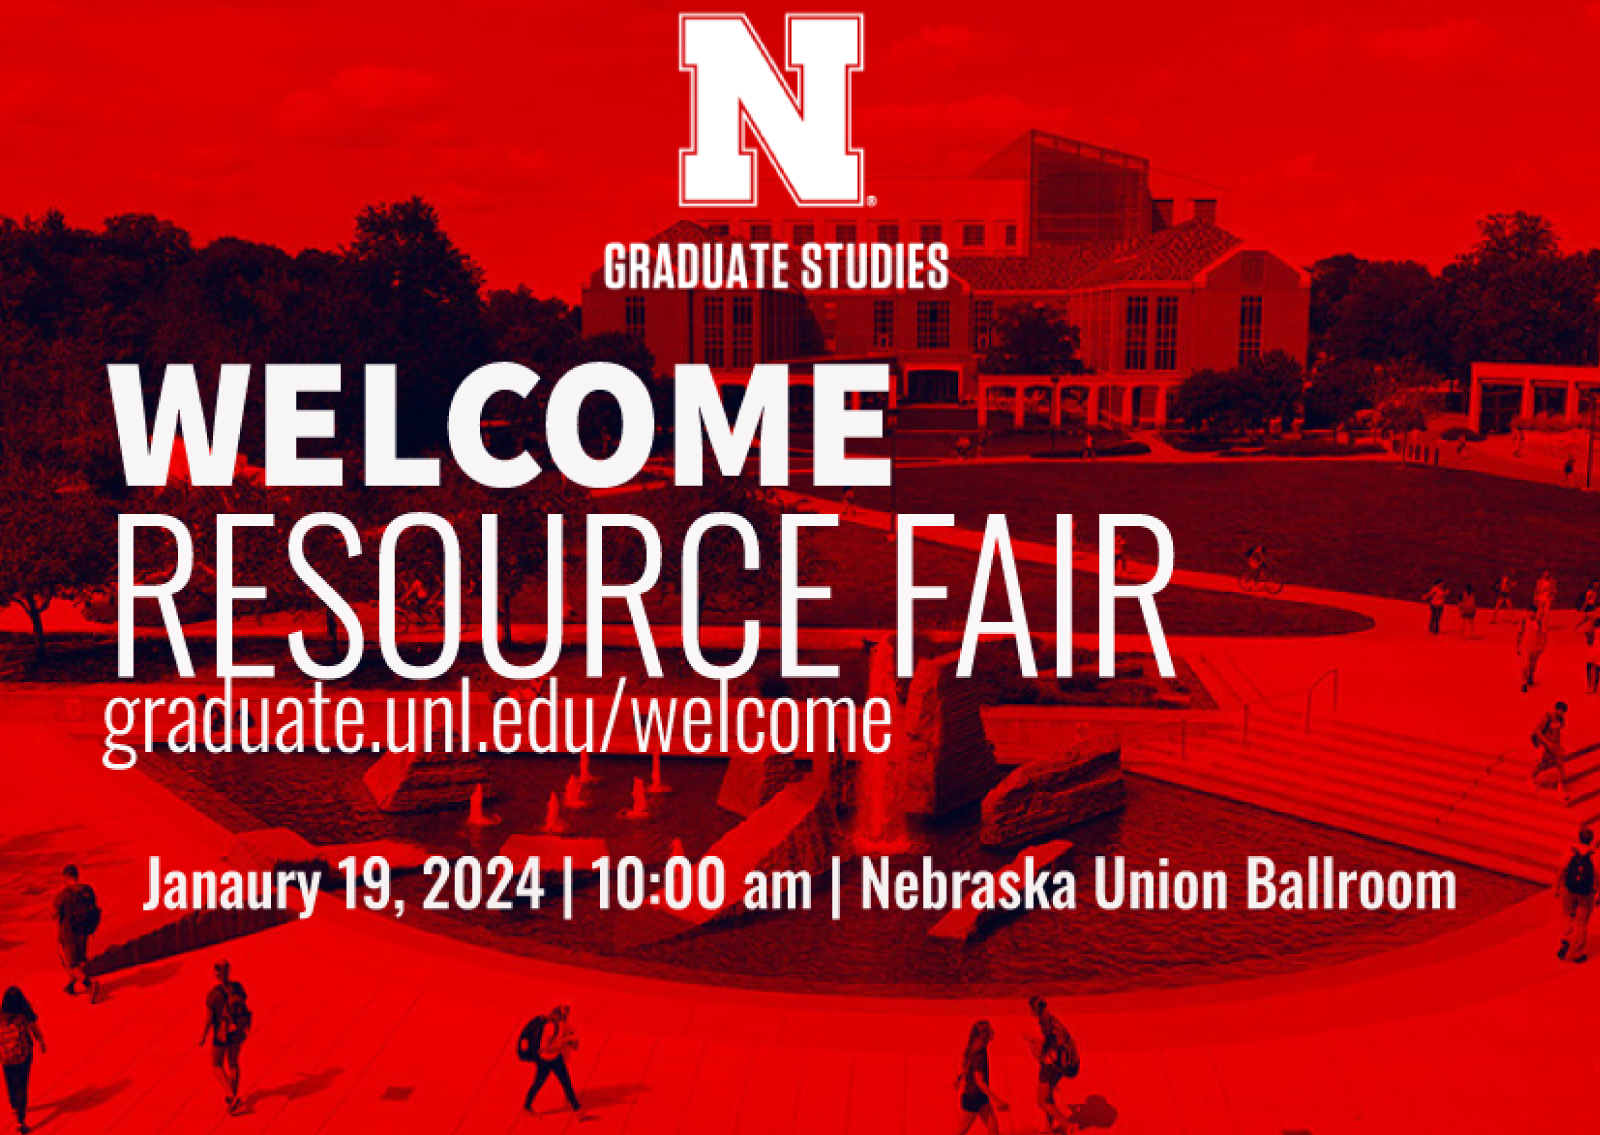 Welcome Resource Fair, January 19, 2024, 10:00 am at Nebraska Union Ballroom